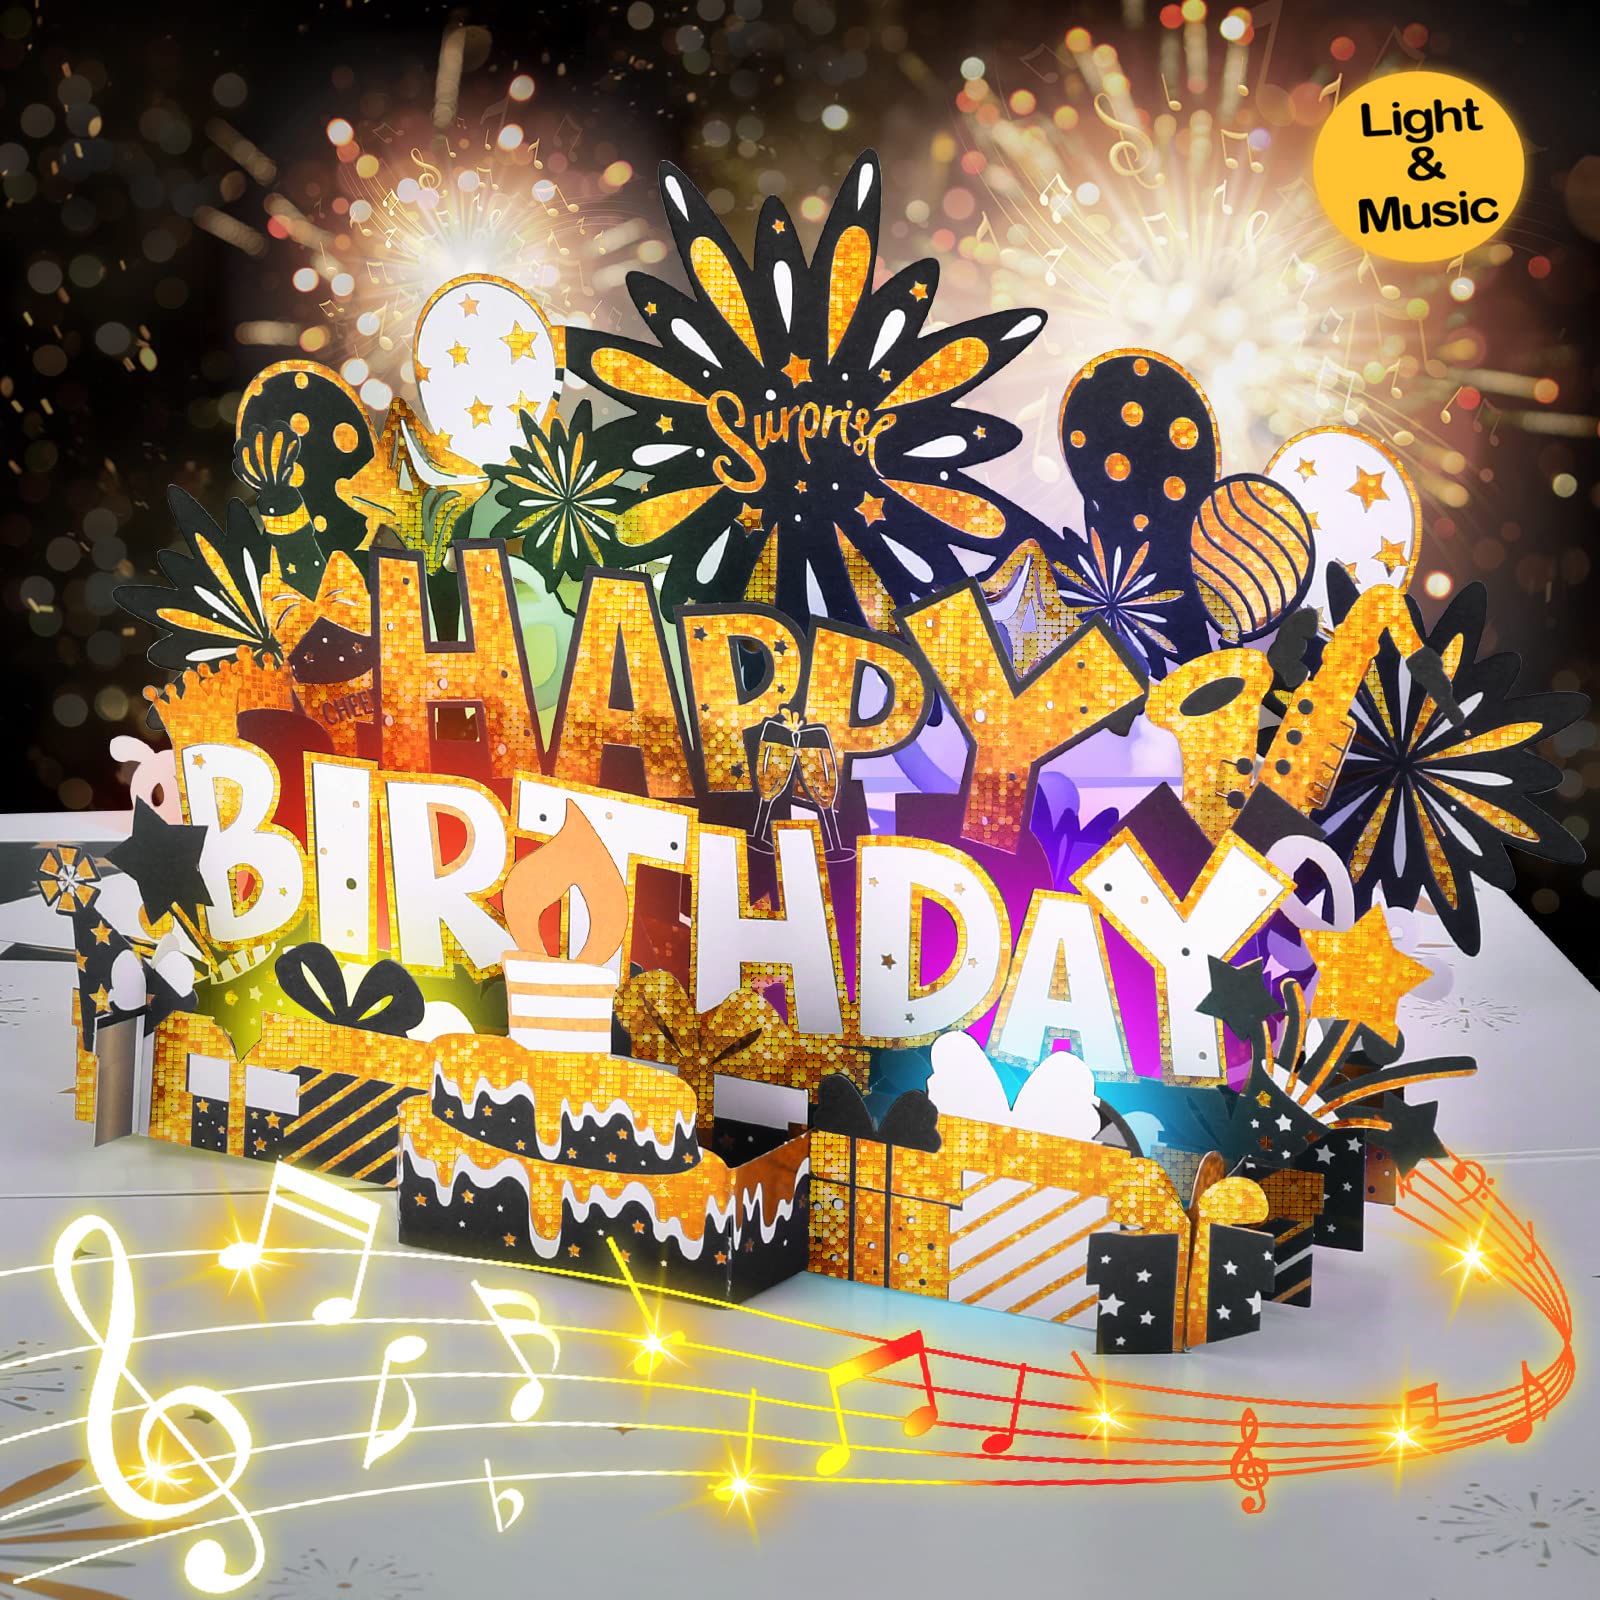 BYKOOO Birthday Card | Musical Pop Up Birthday Cards w Light | LED Light & Play Happy Birthday Music Pop Up Card | Greeting Cards Gifts Birthday Gift for Him or Her | Black Gold (Music & Lighting)